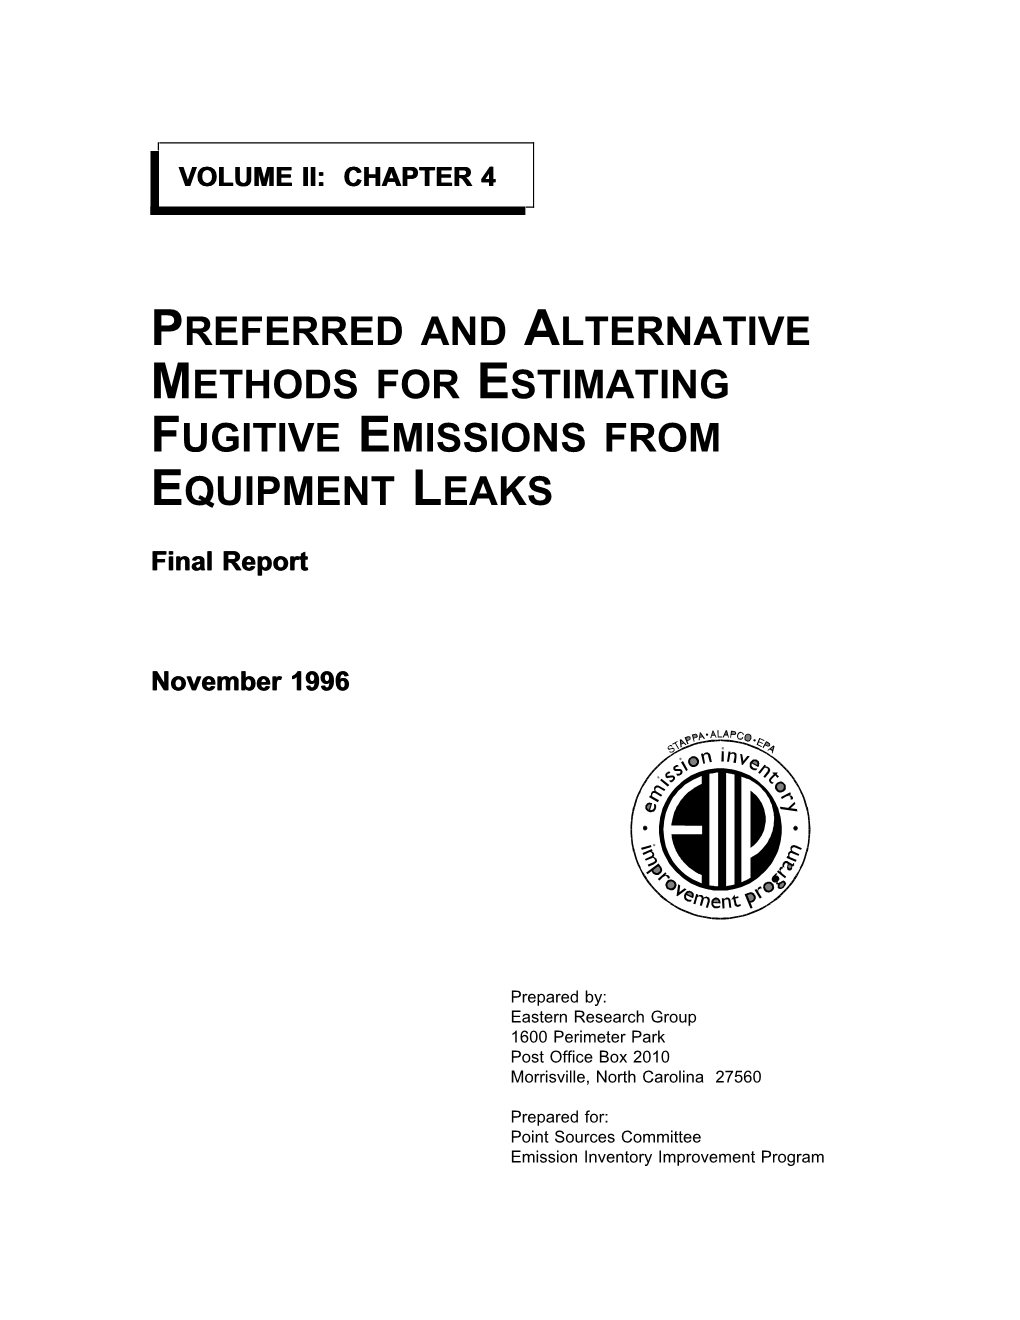 Preferred and Alternative Methods for Estimating Fugitive Emissions from Equipment Leaks